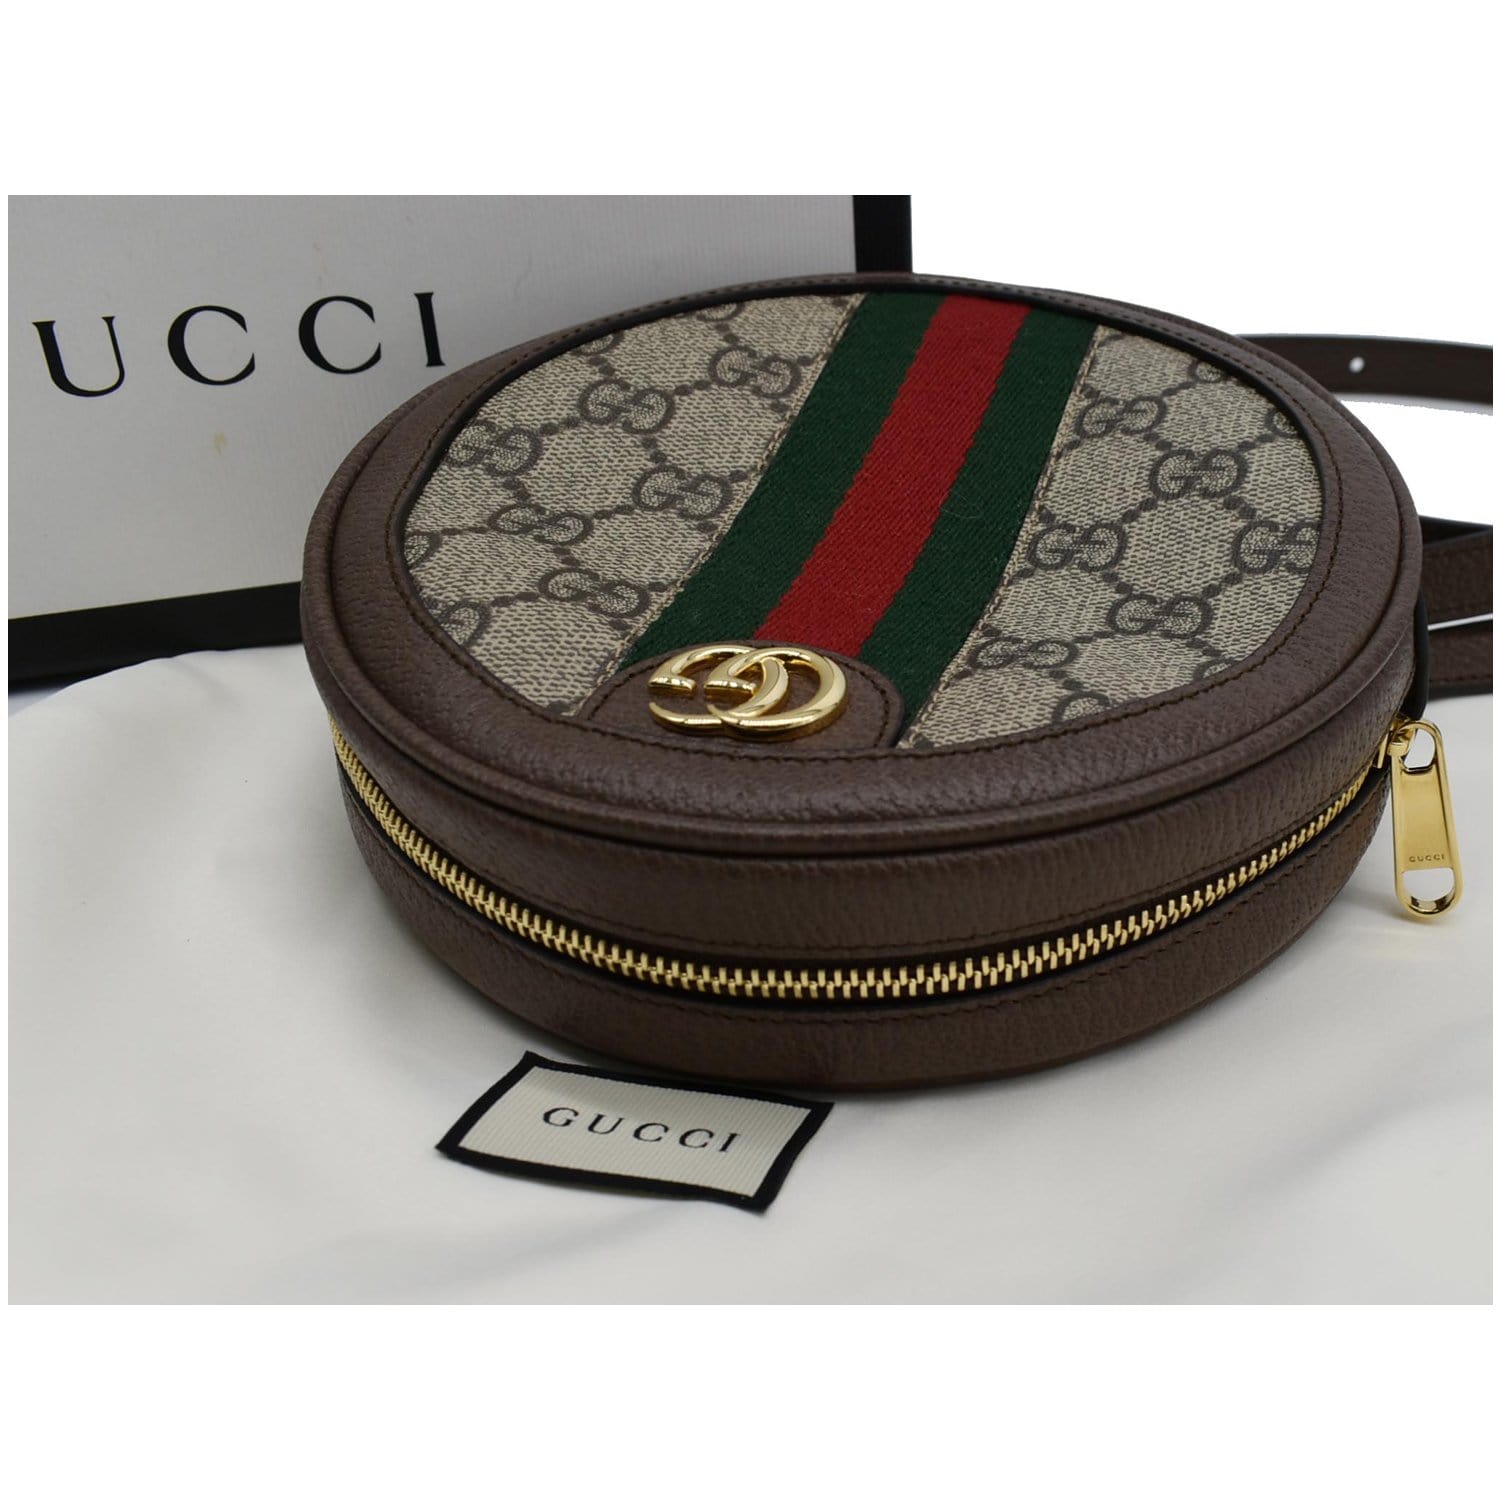 Gucci Ophidia Small Duffle Bag - Farfetch